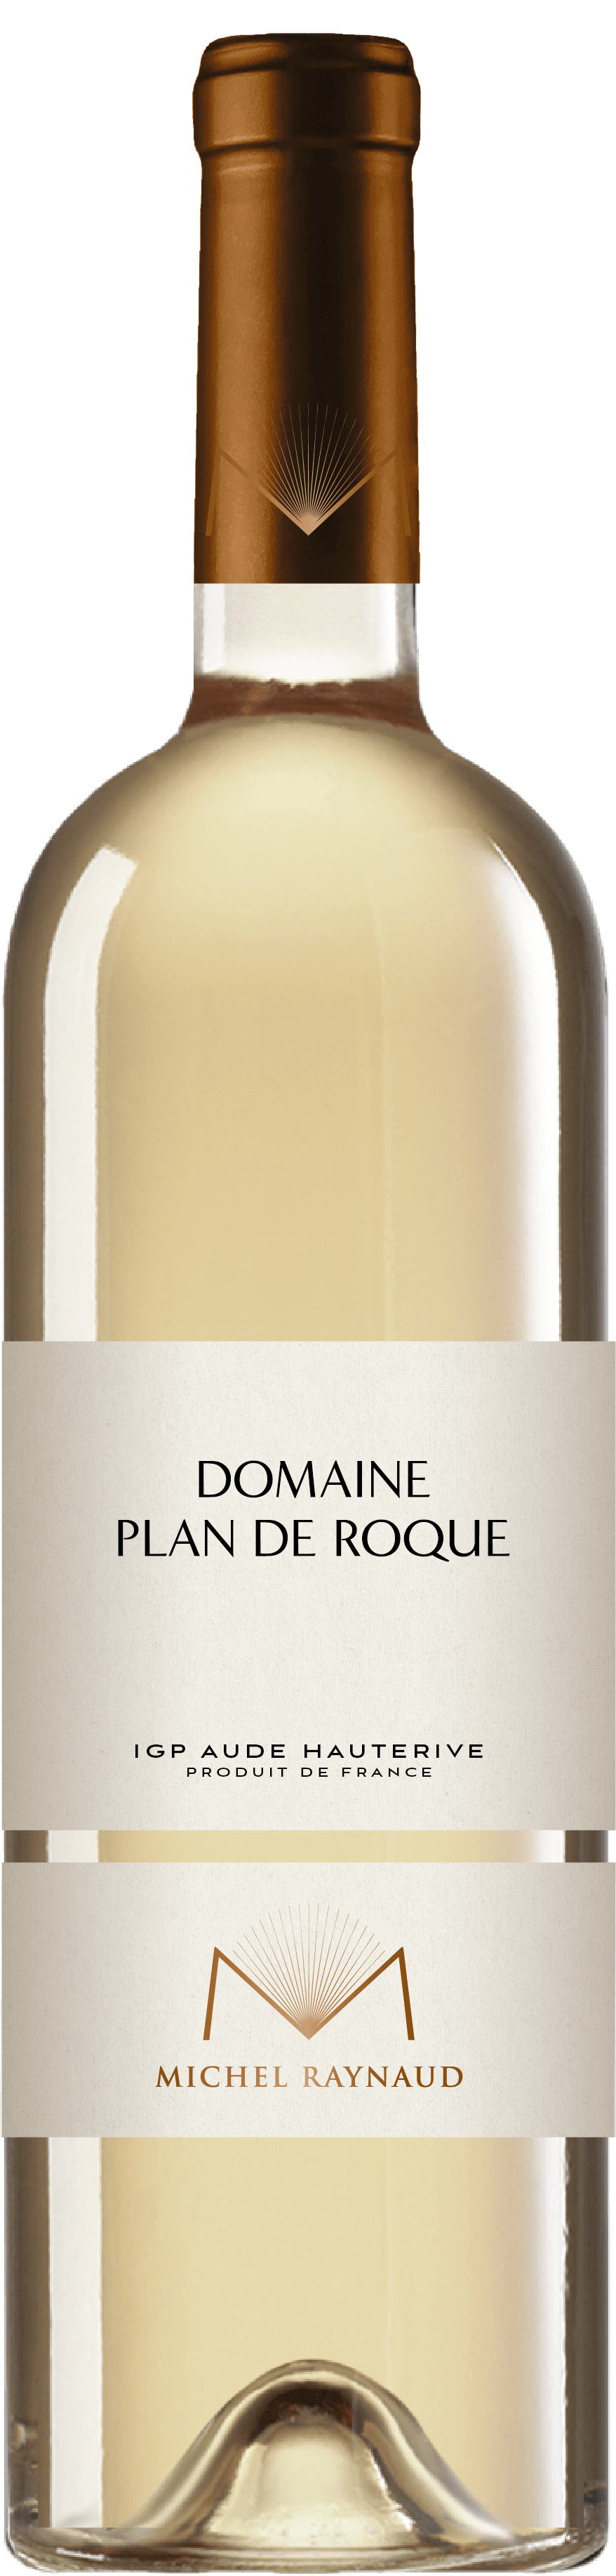 Domaine Plan de Roque Rouge | IGP Aude Hauterive | Michel Raynaud - Michel Raynaud